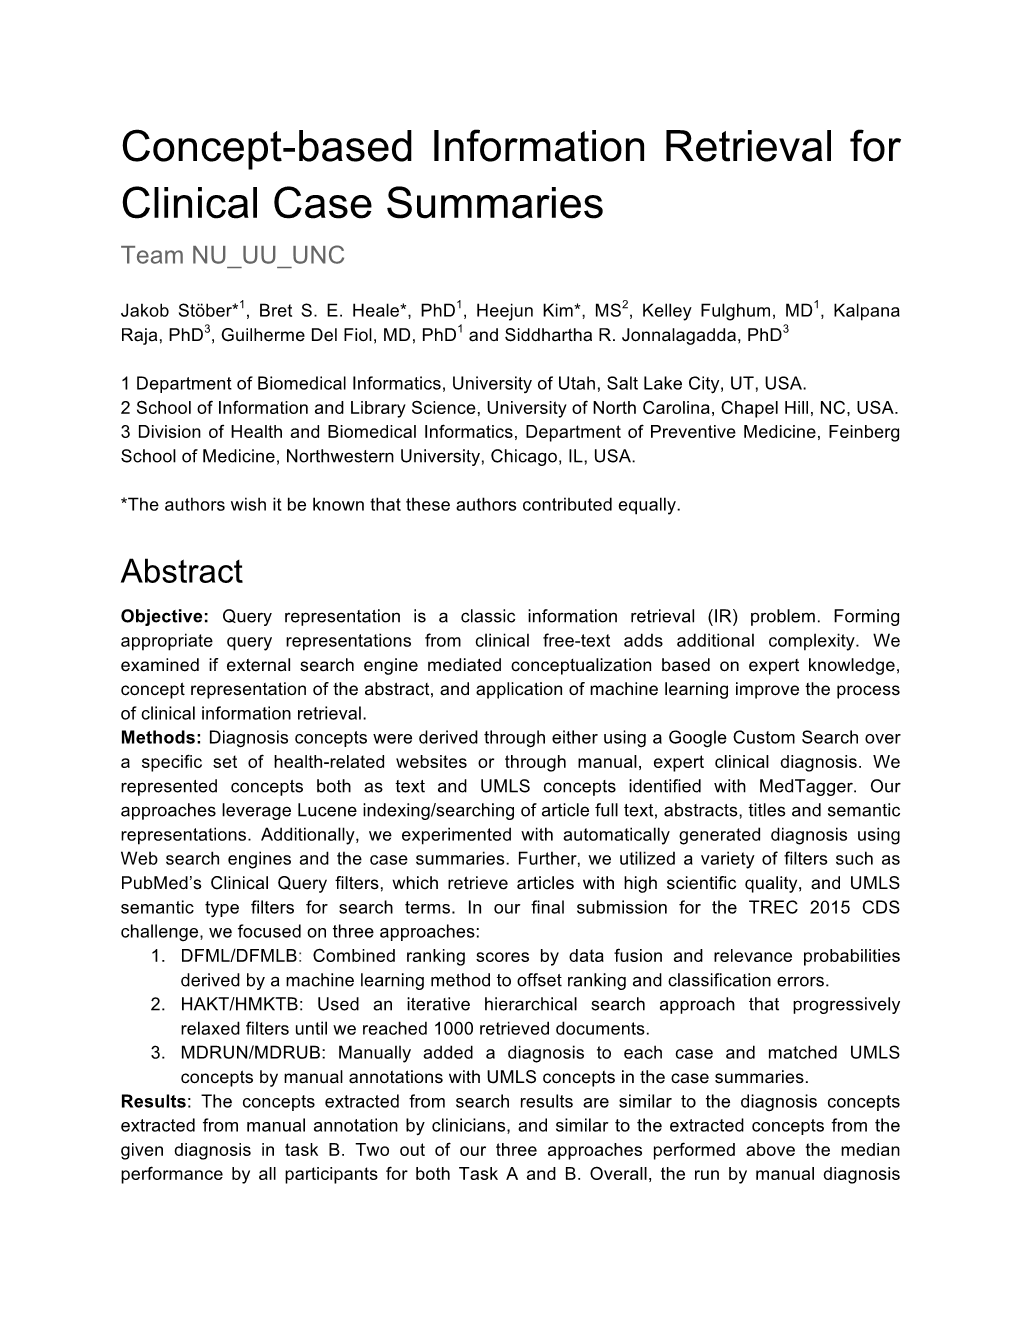 Concept-Based Information Retrieval for Clinical Case Summaries Team NU UU UNC